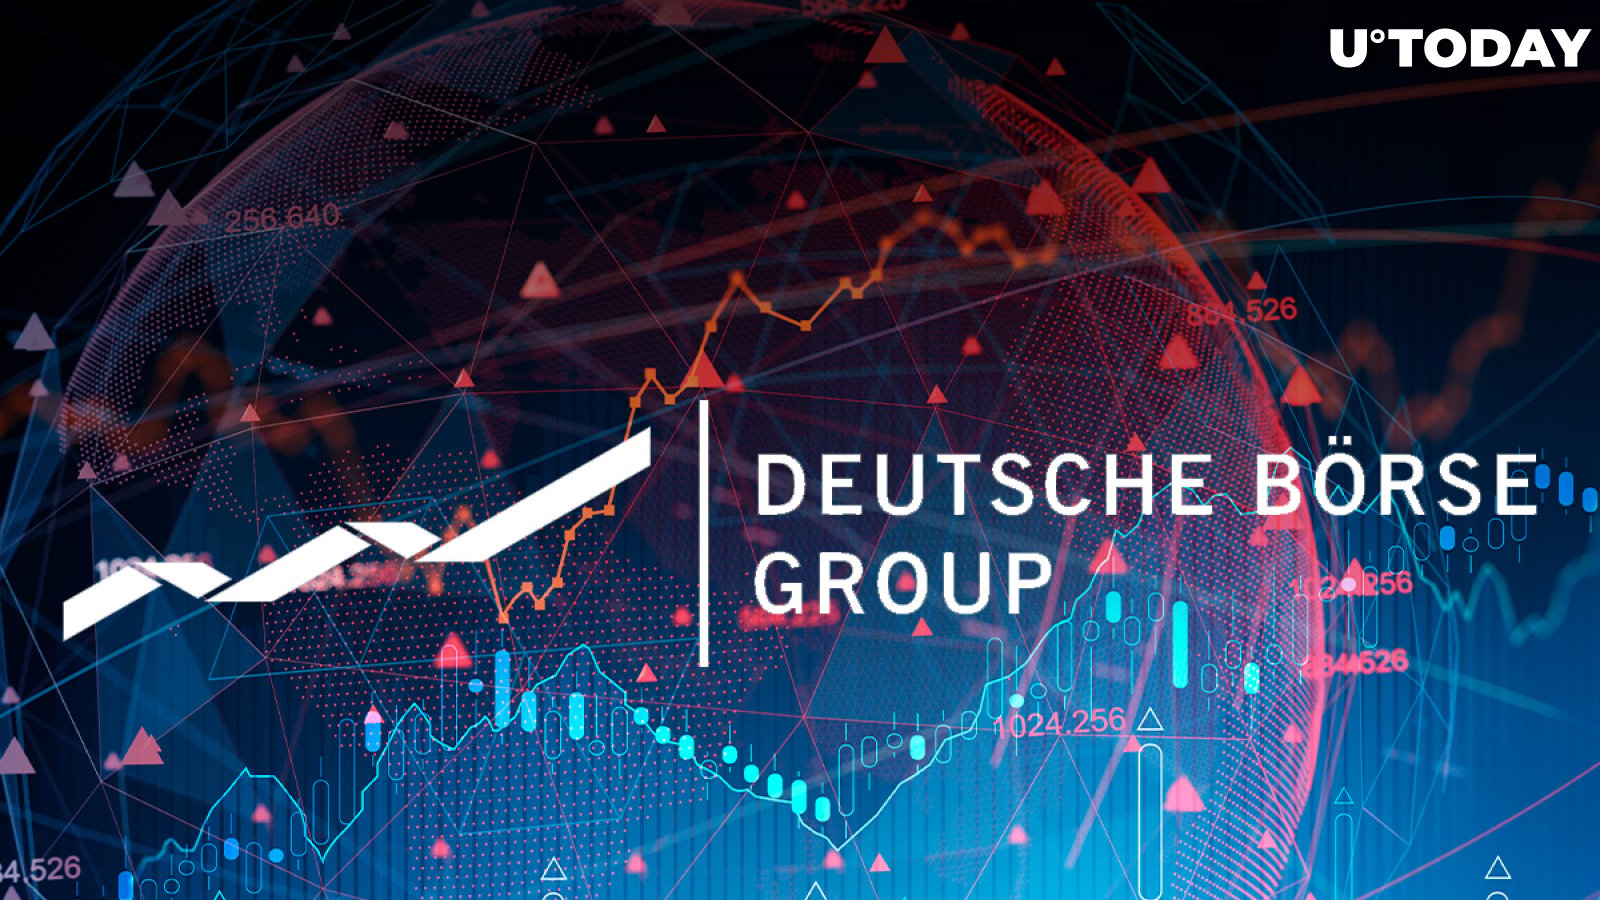 Major Exchange Organization Deutsche Börse Group Makes Acquisition to Expand Its Digital Asset Offering